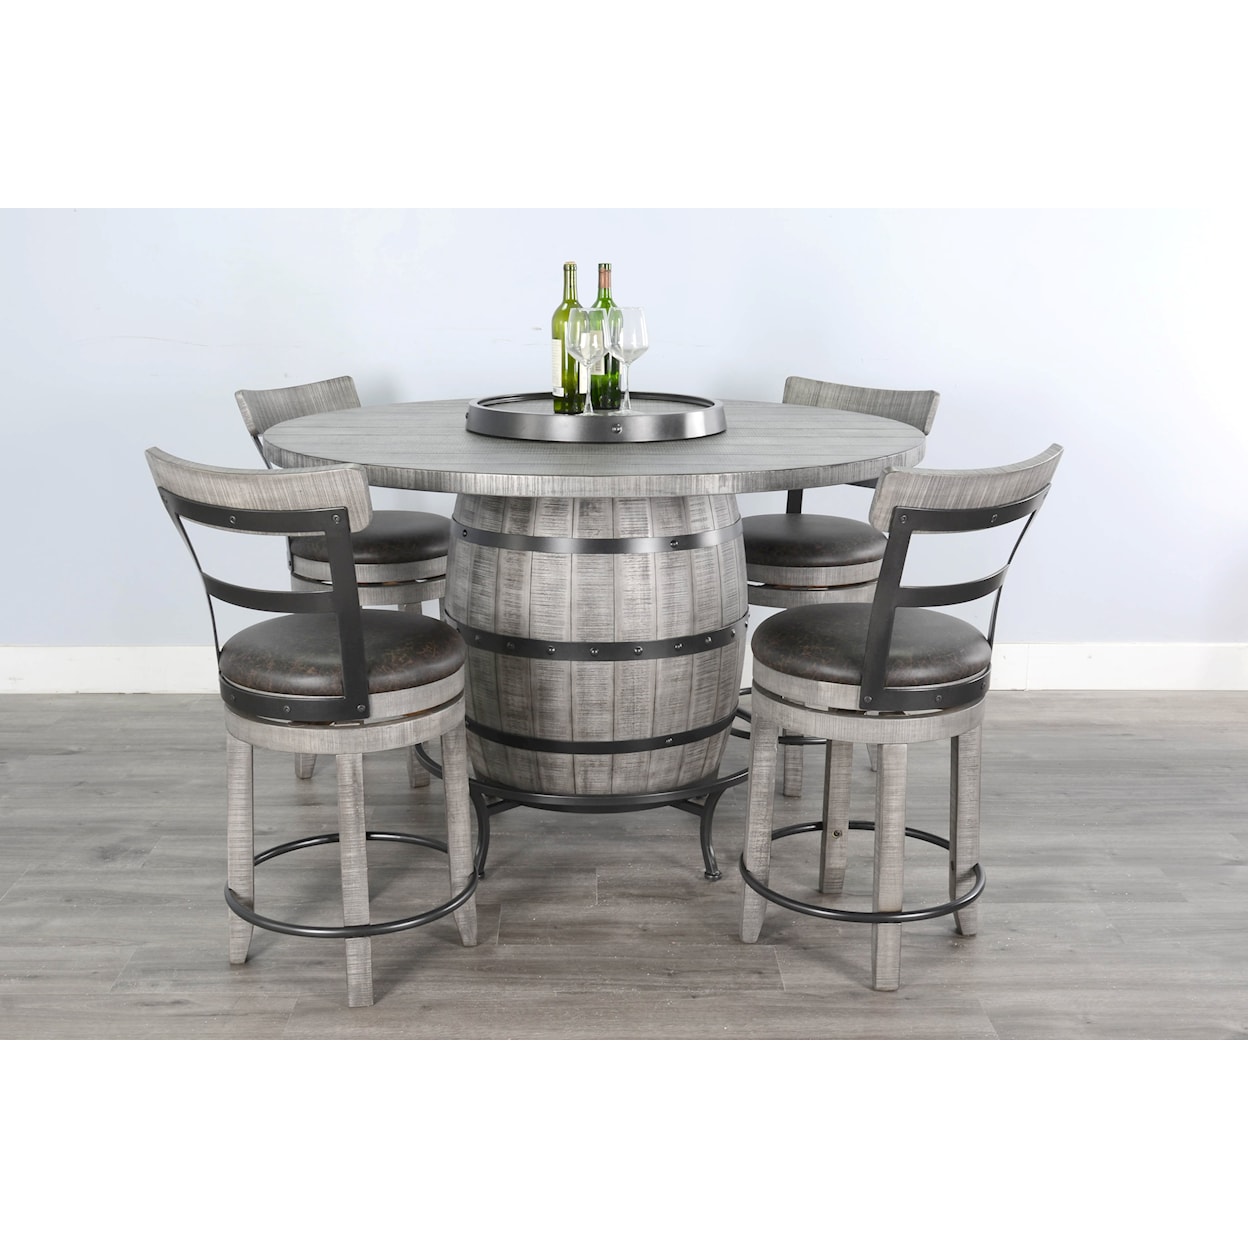 Sunny Designs Alpine Grey Round Pub Table with Wine Barrel Base